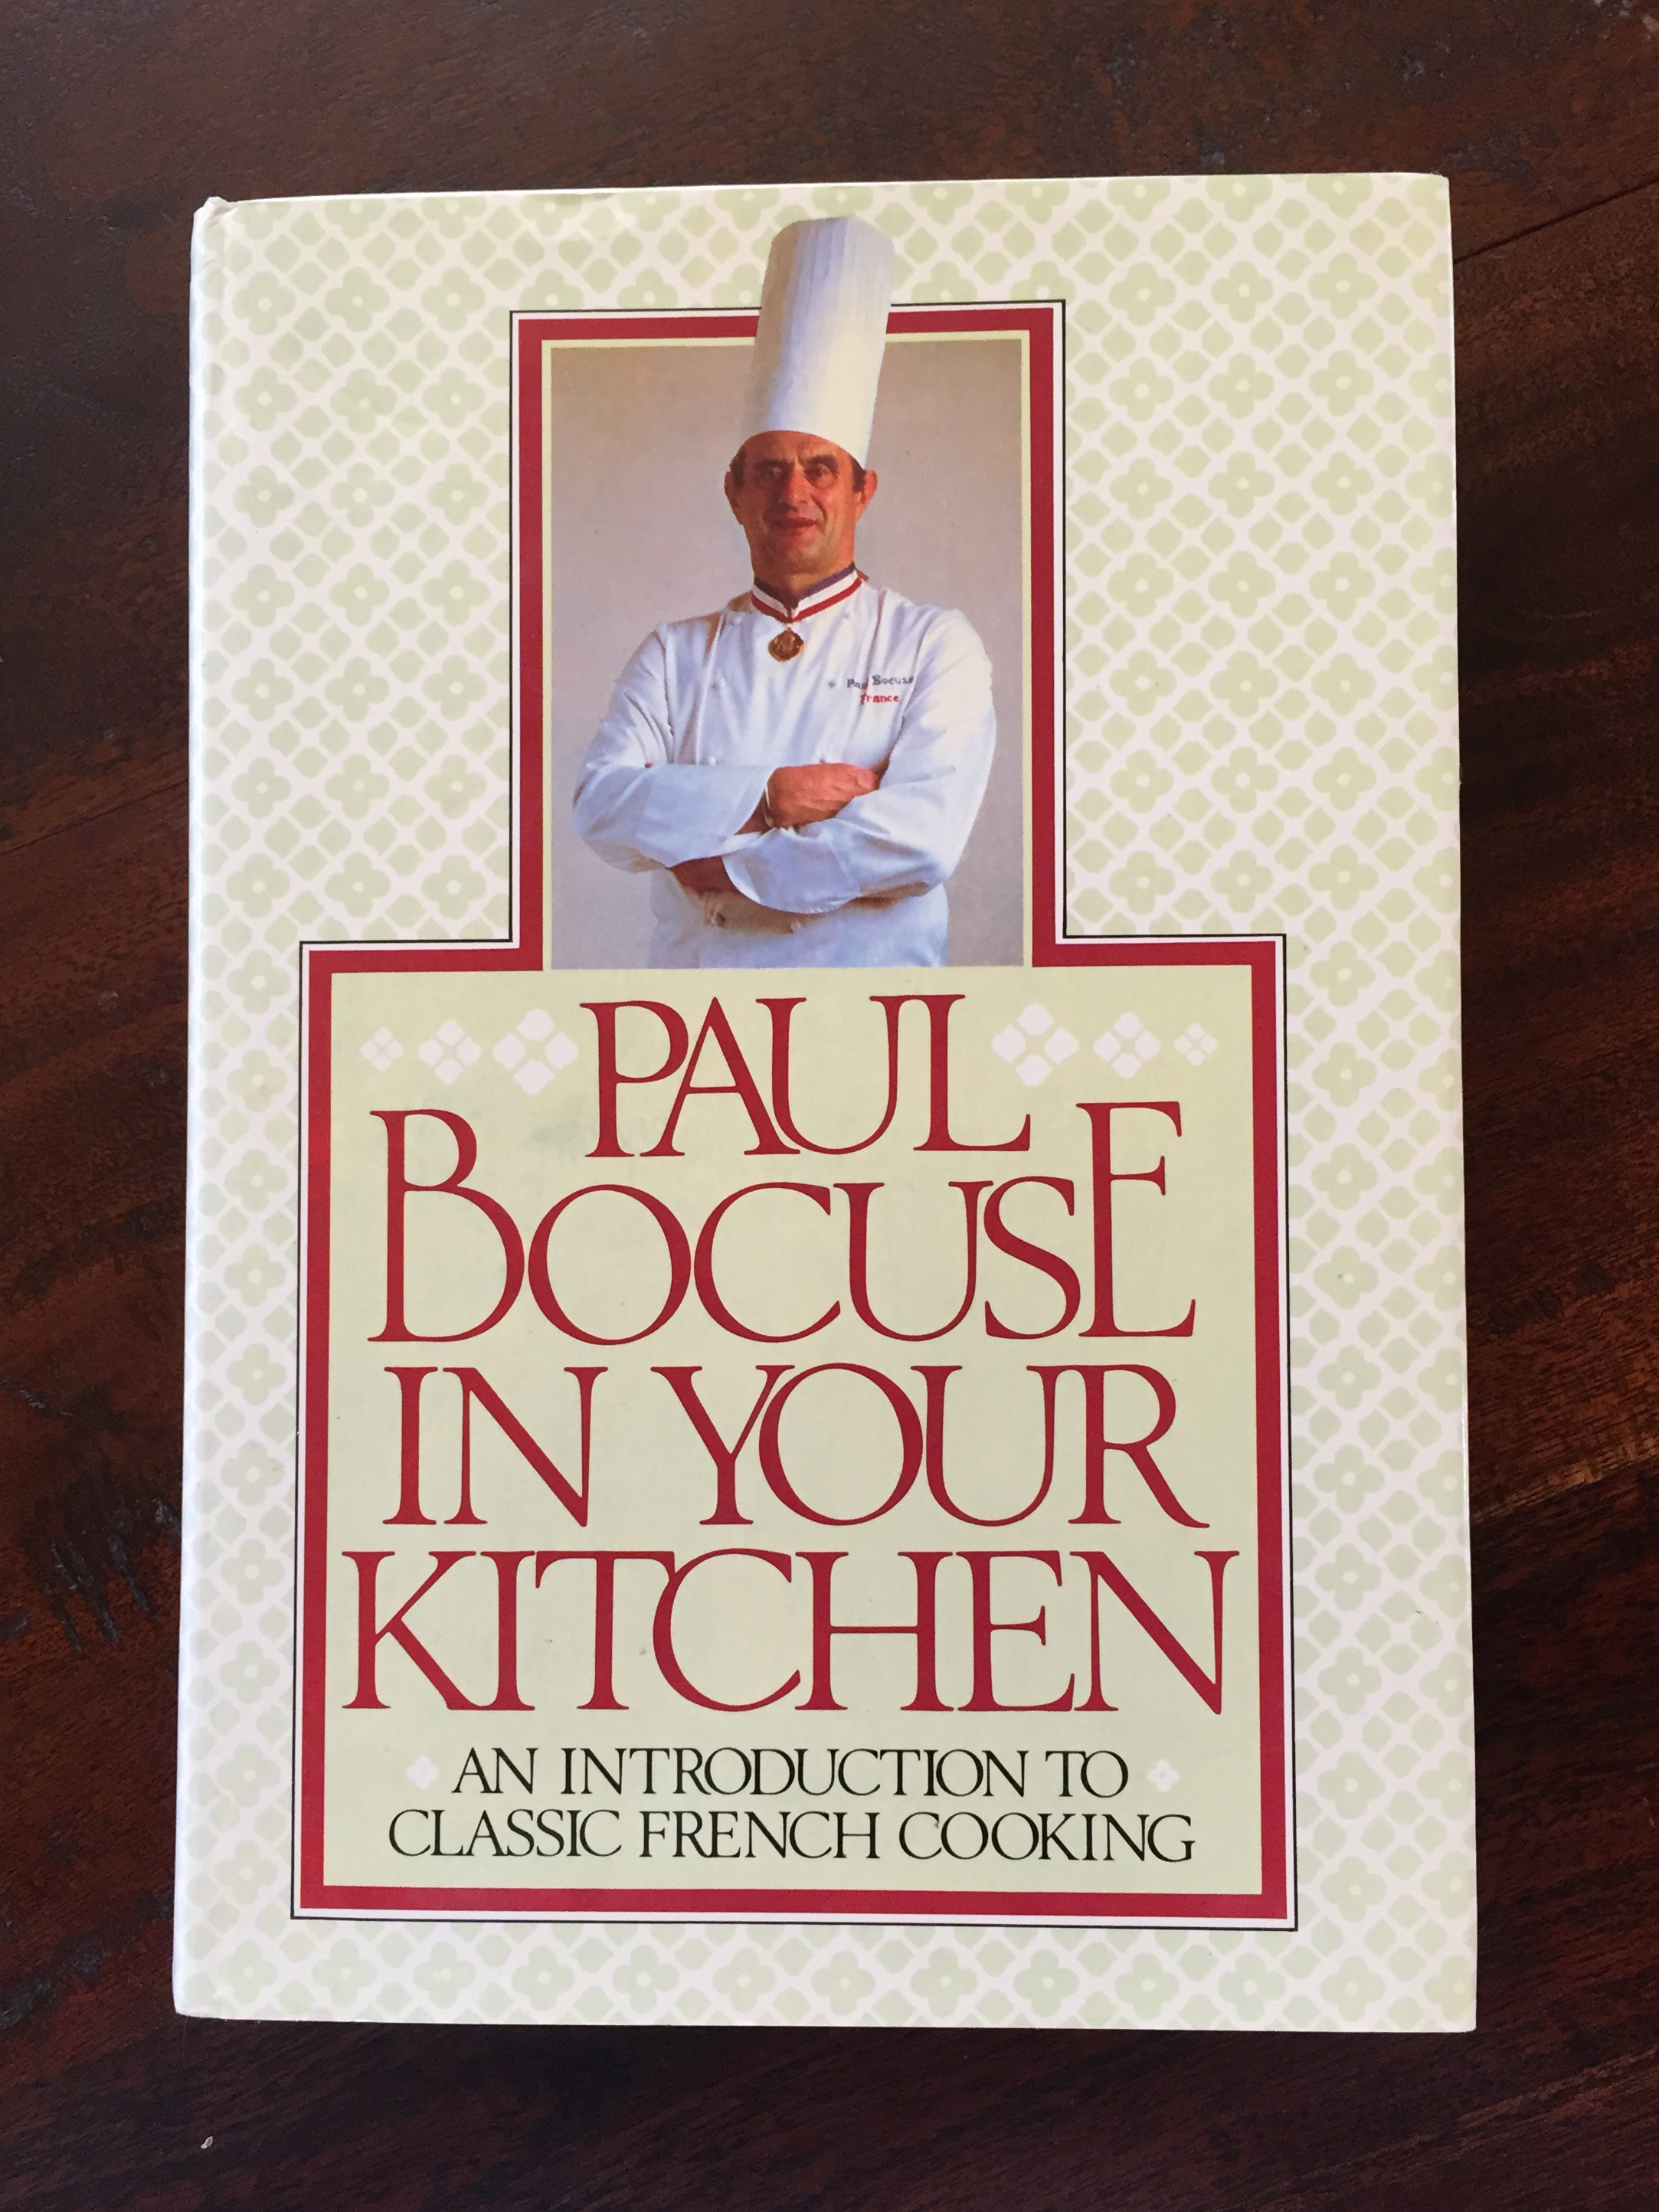 My first cookbook!